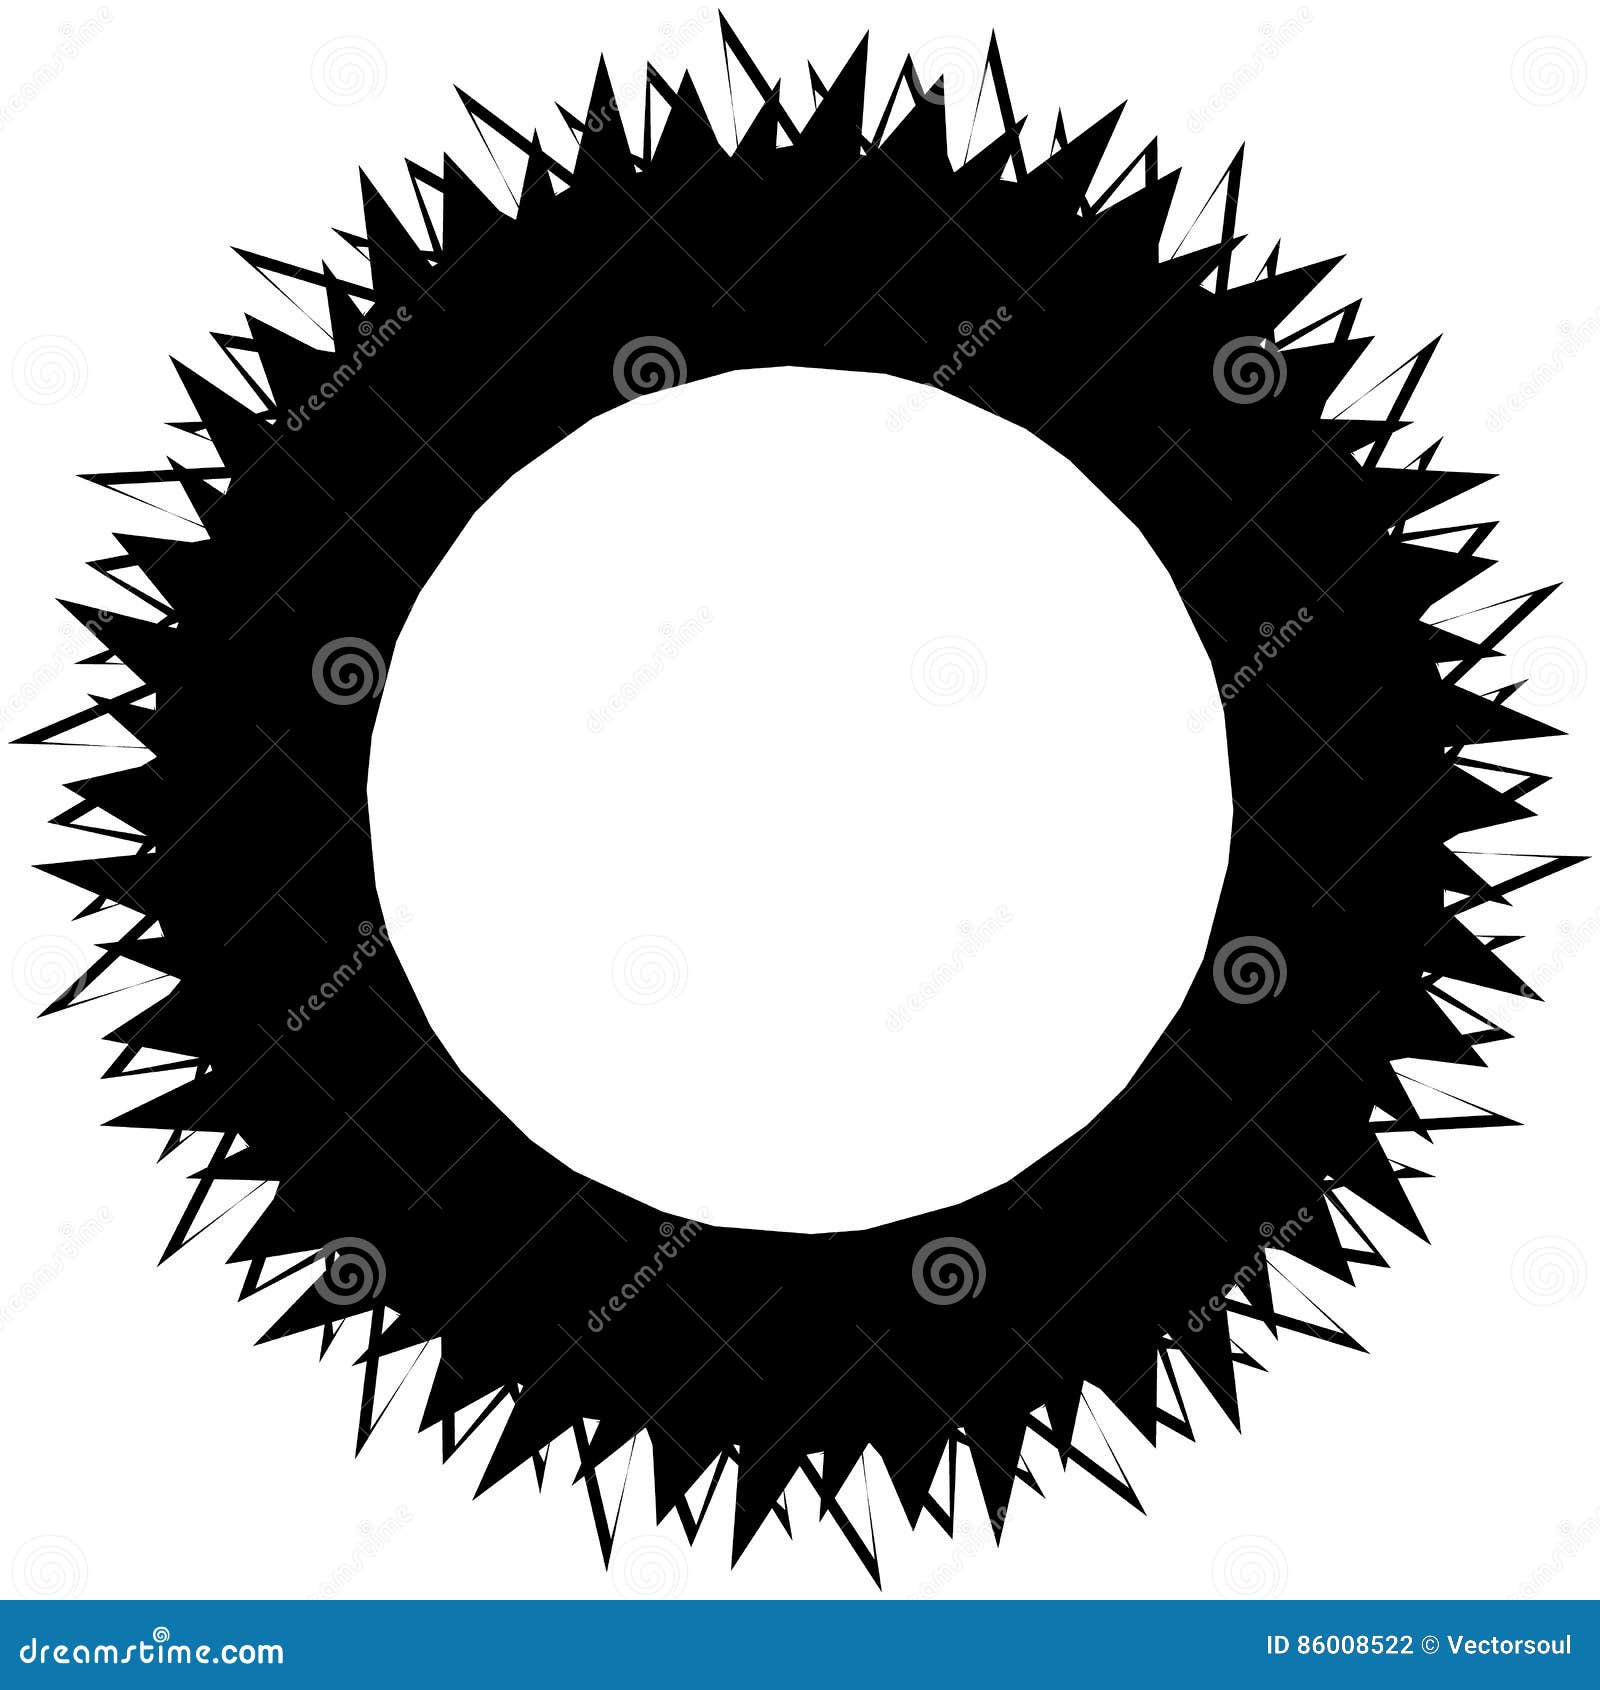 Edgy monochrome circular element. Black and white angular motif, shape - Royalty free vector illustration